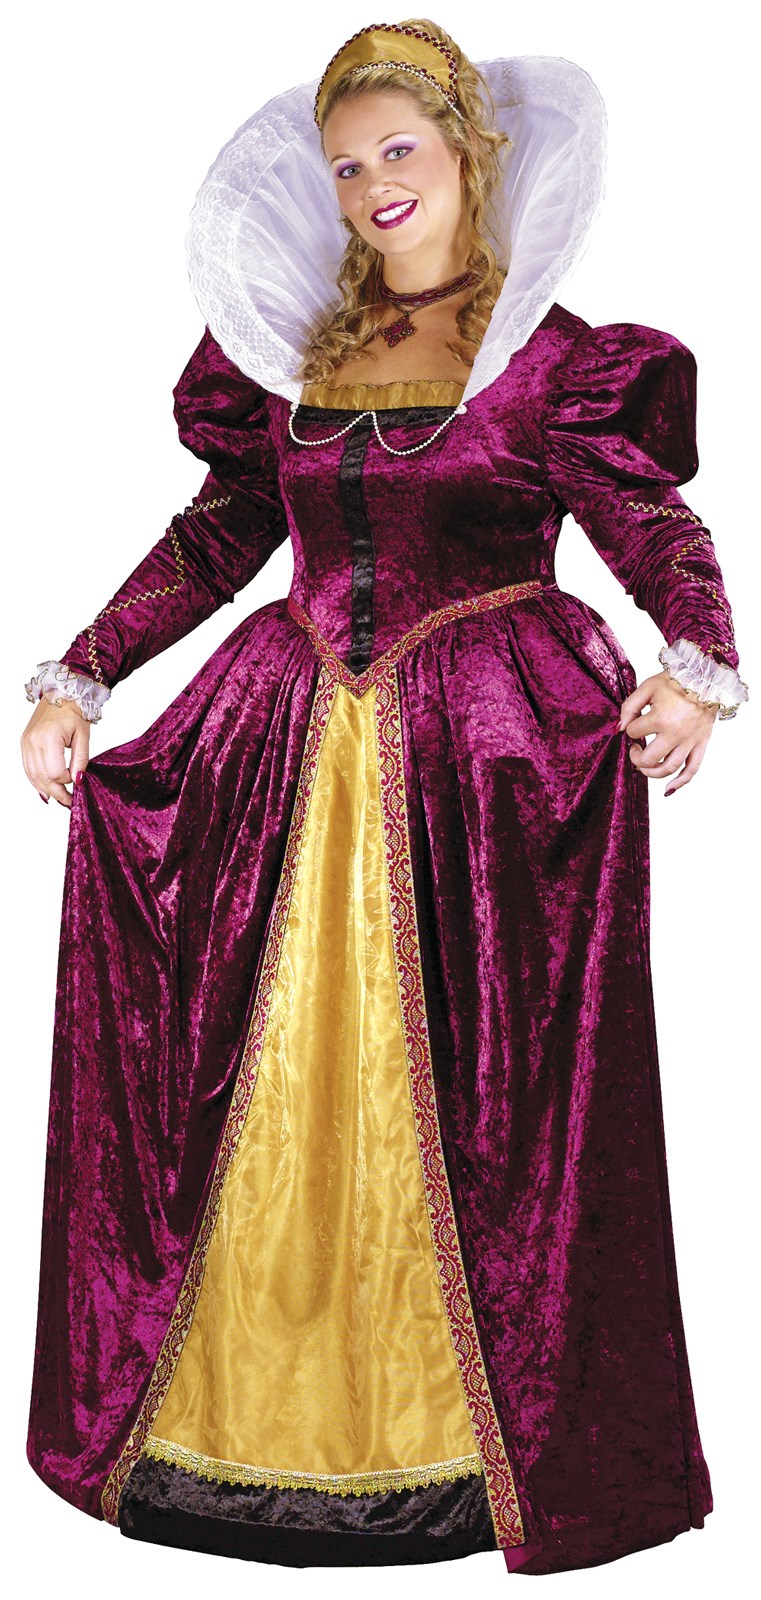 Elizabethan Queen Adult Plus Costume